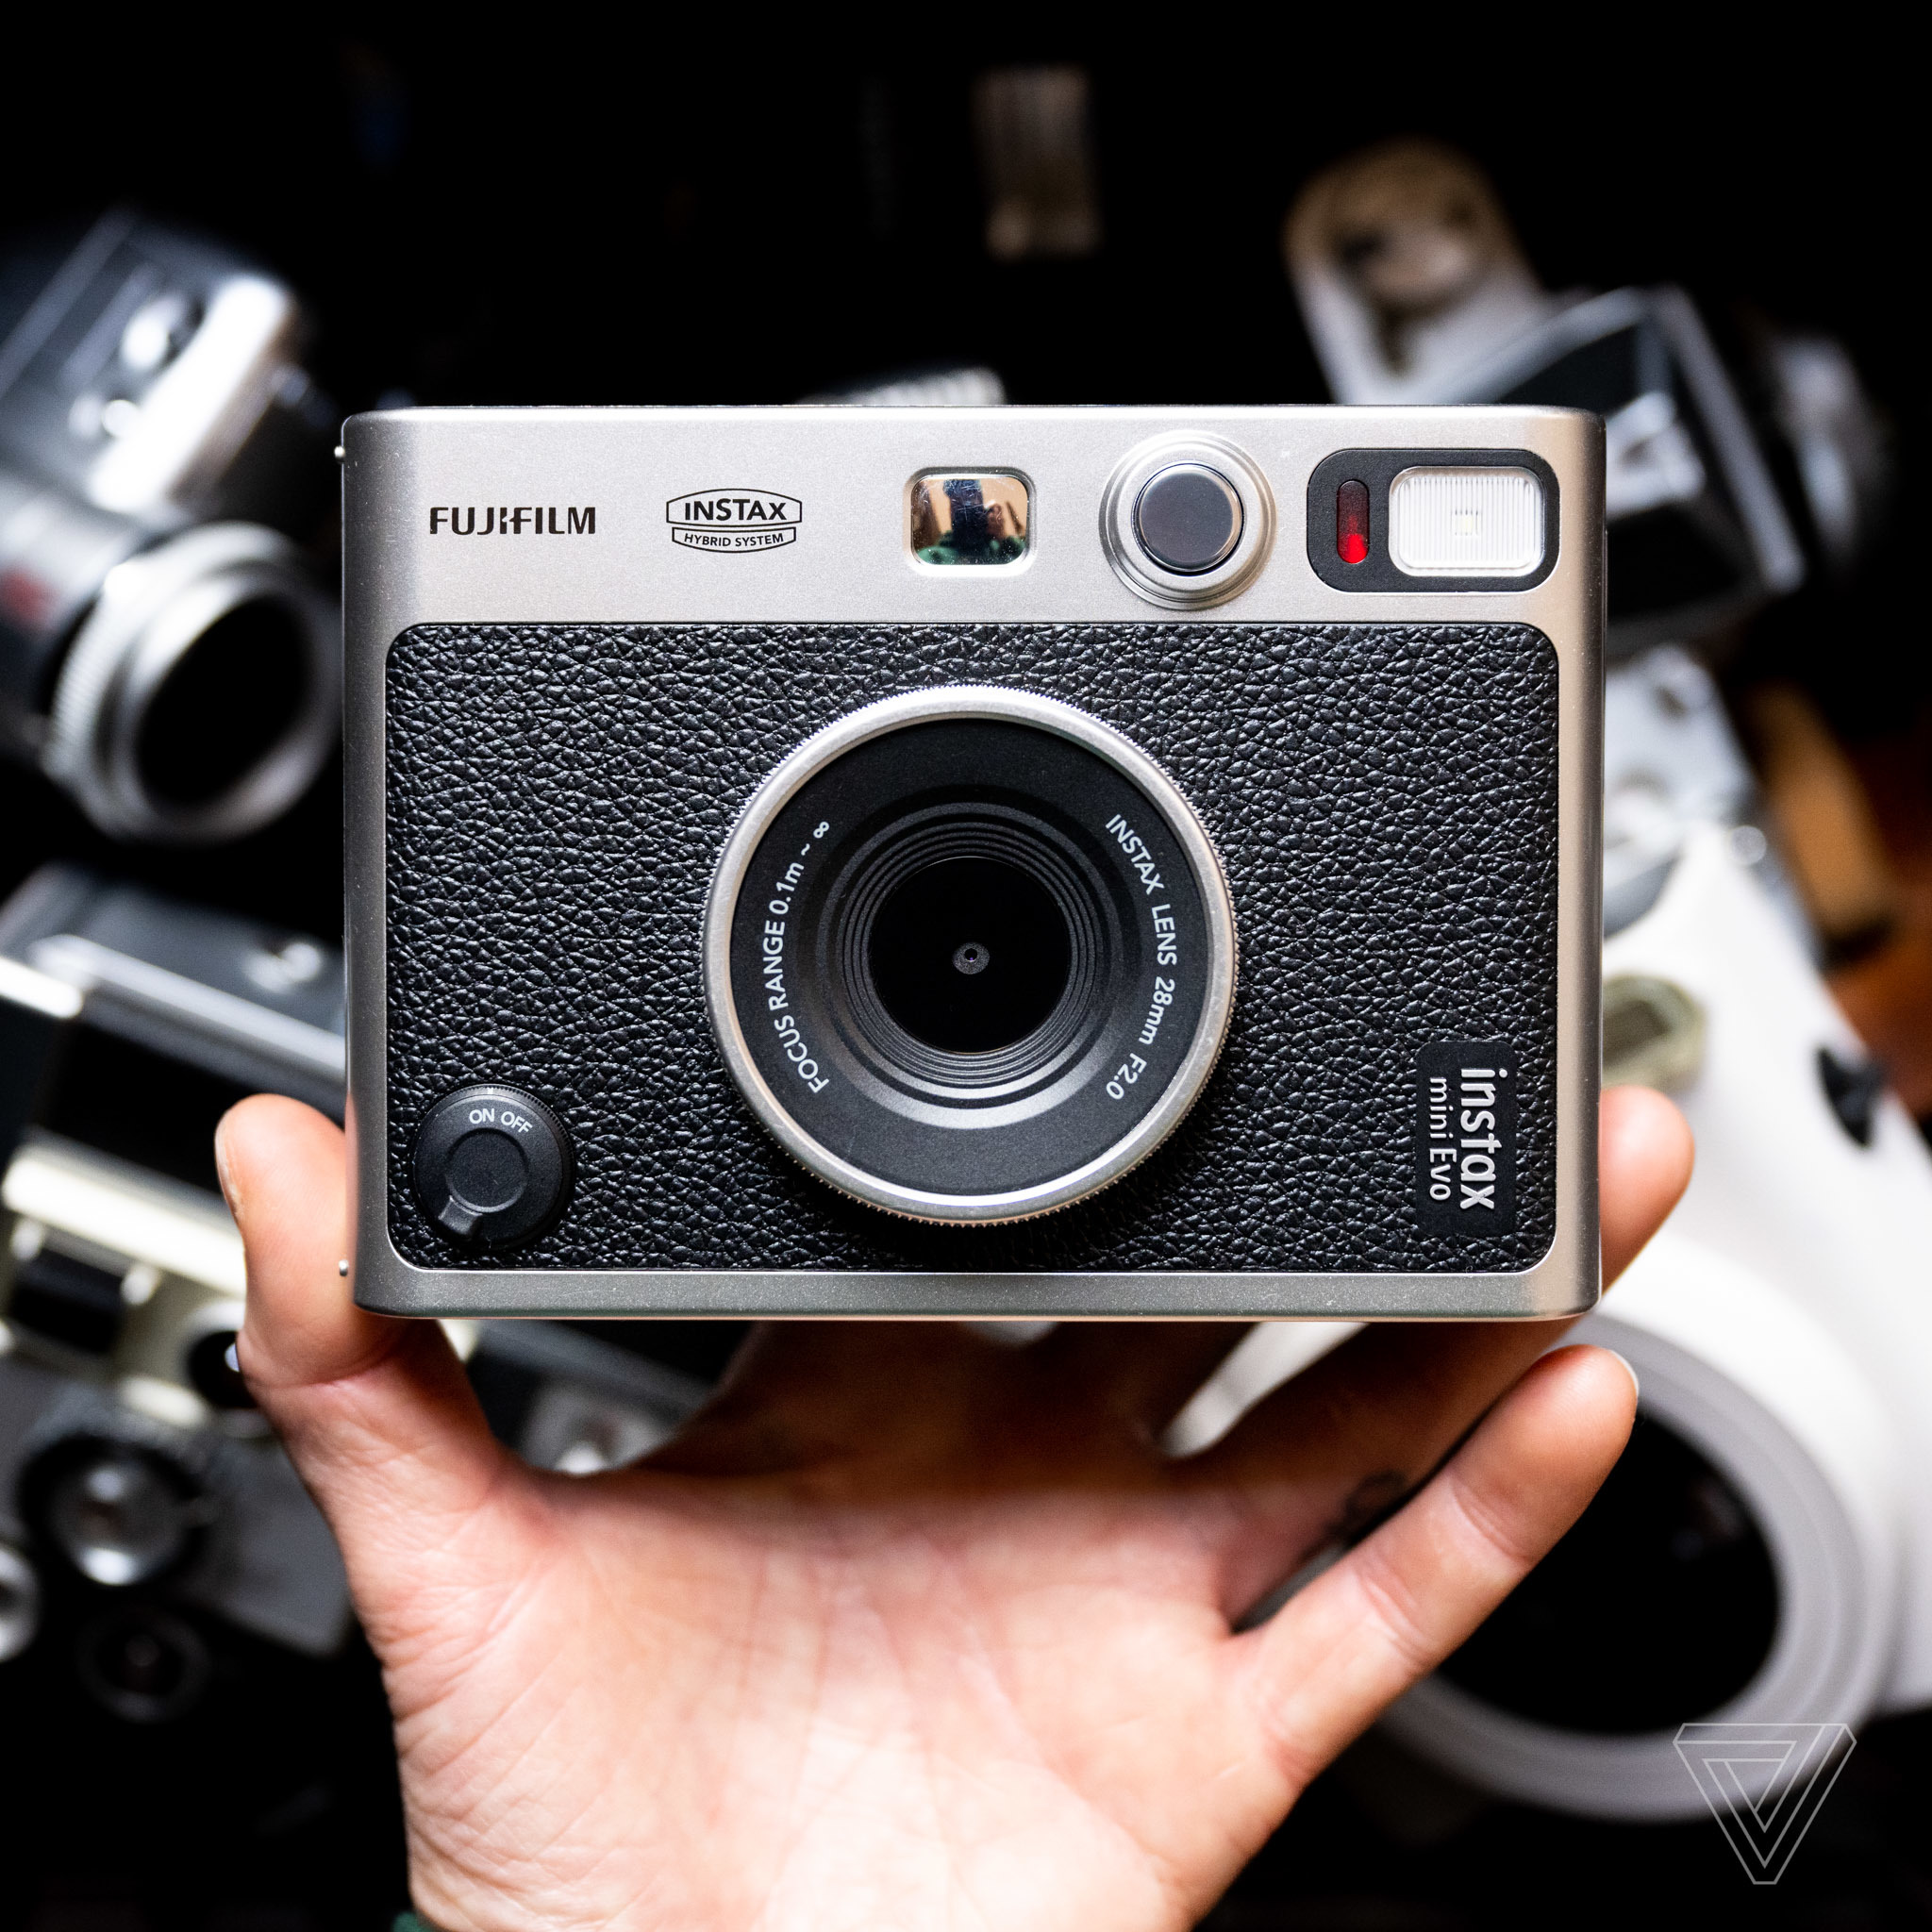 sensor Neuken Sterkte Fujifilm Instax Mini Evo review: more camera than toy - The Verge